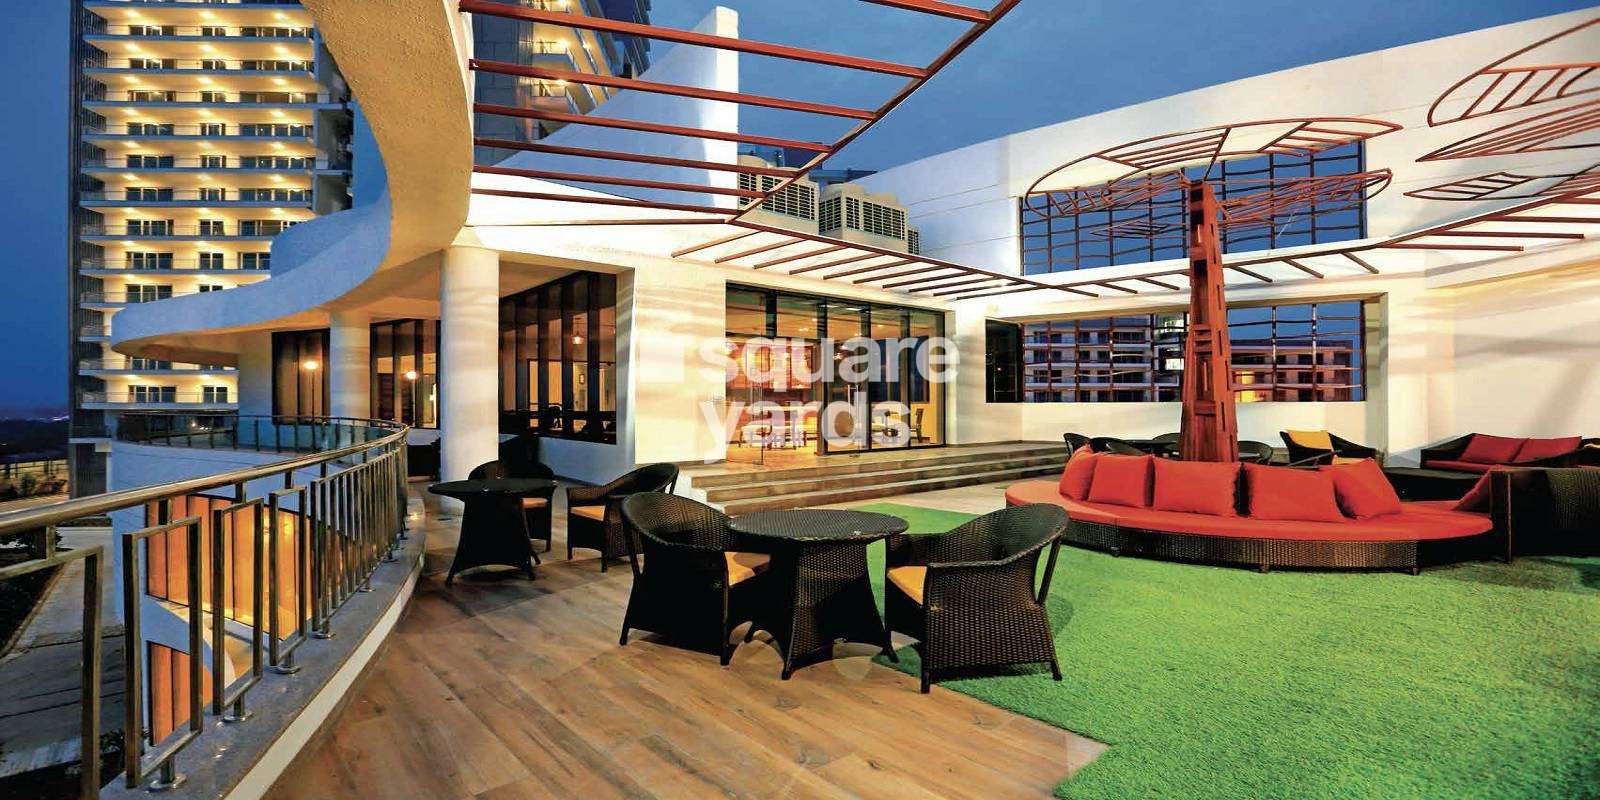 tata gurgaon gateway amenities features11